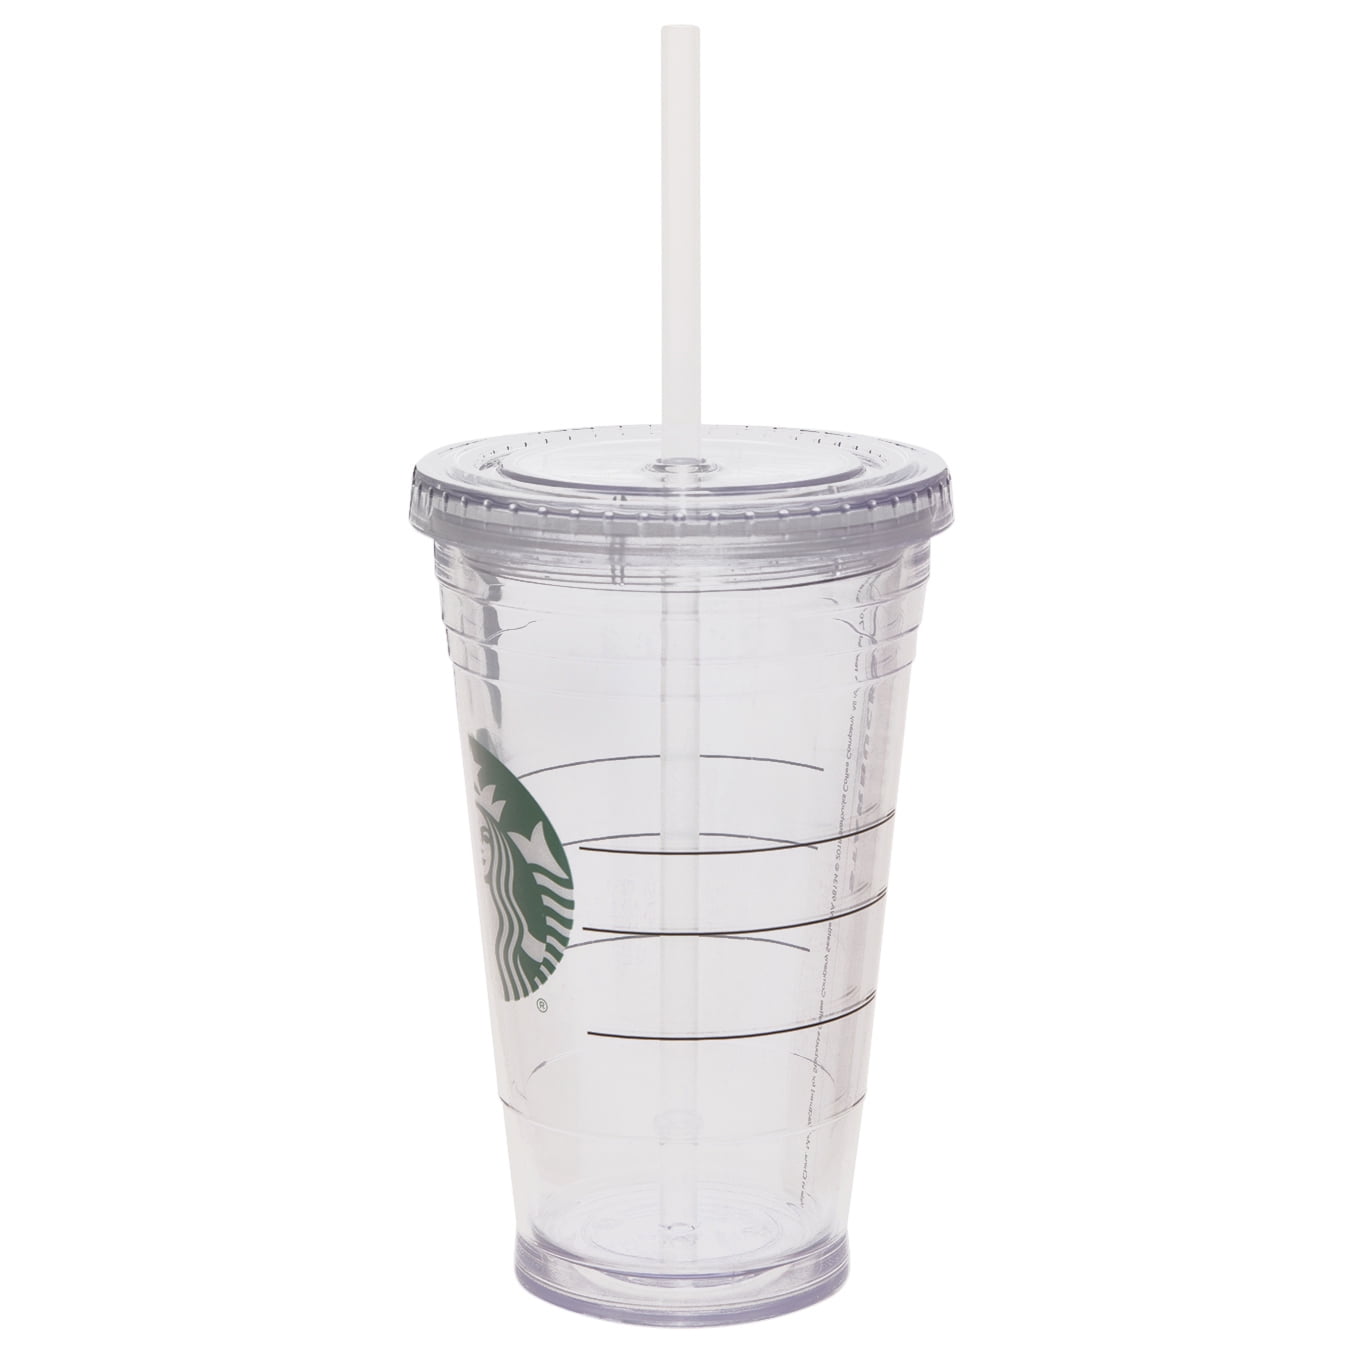 Set Of 2 Starbucks Black And White 16oz Plastic Straw Cups Tumblers